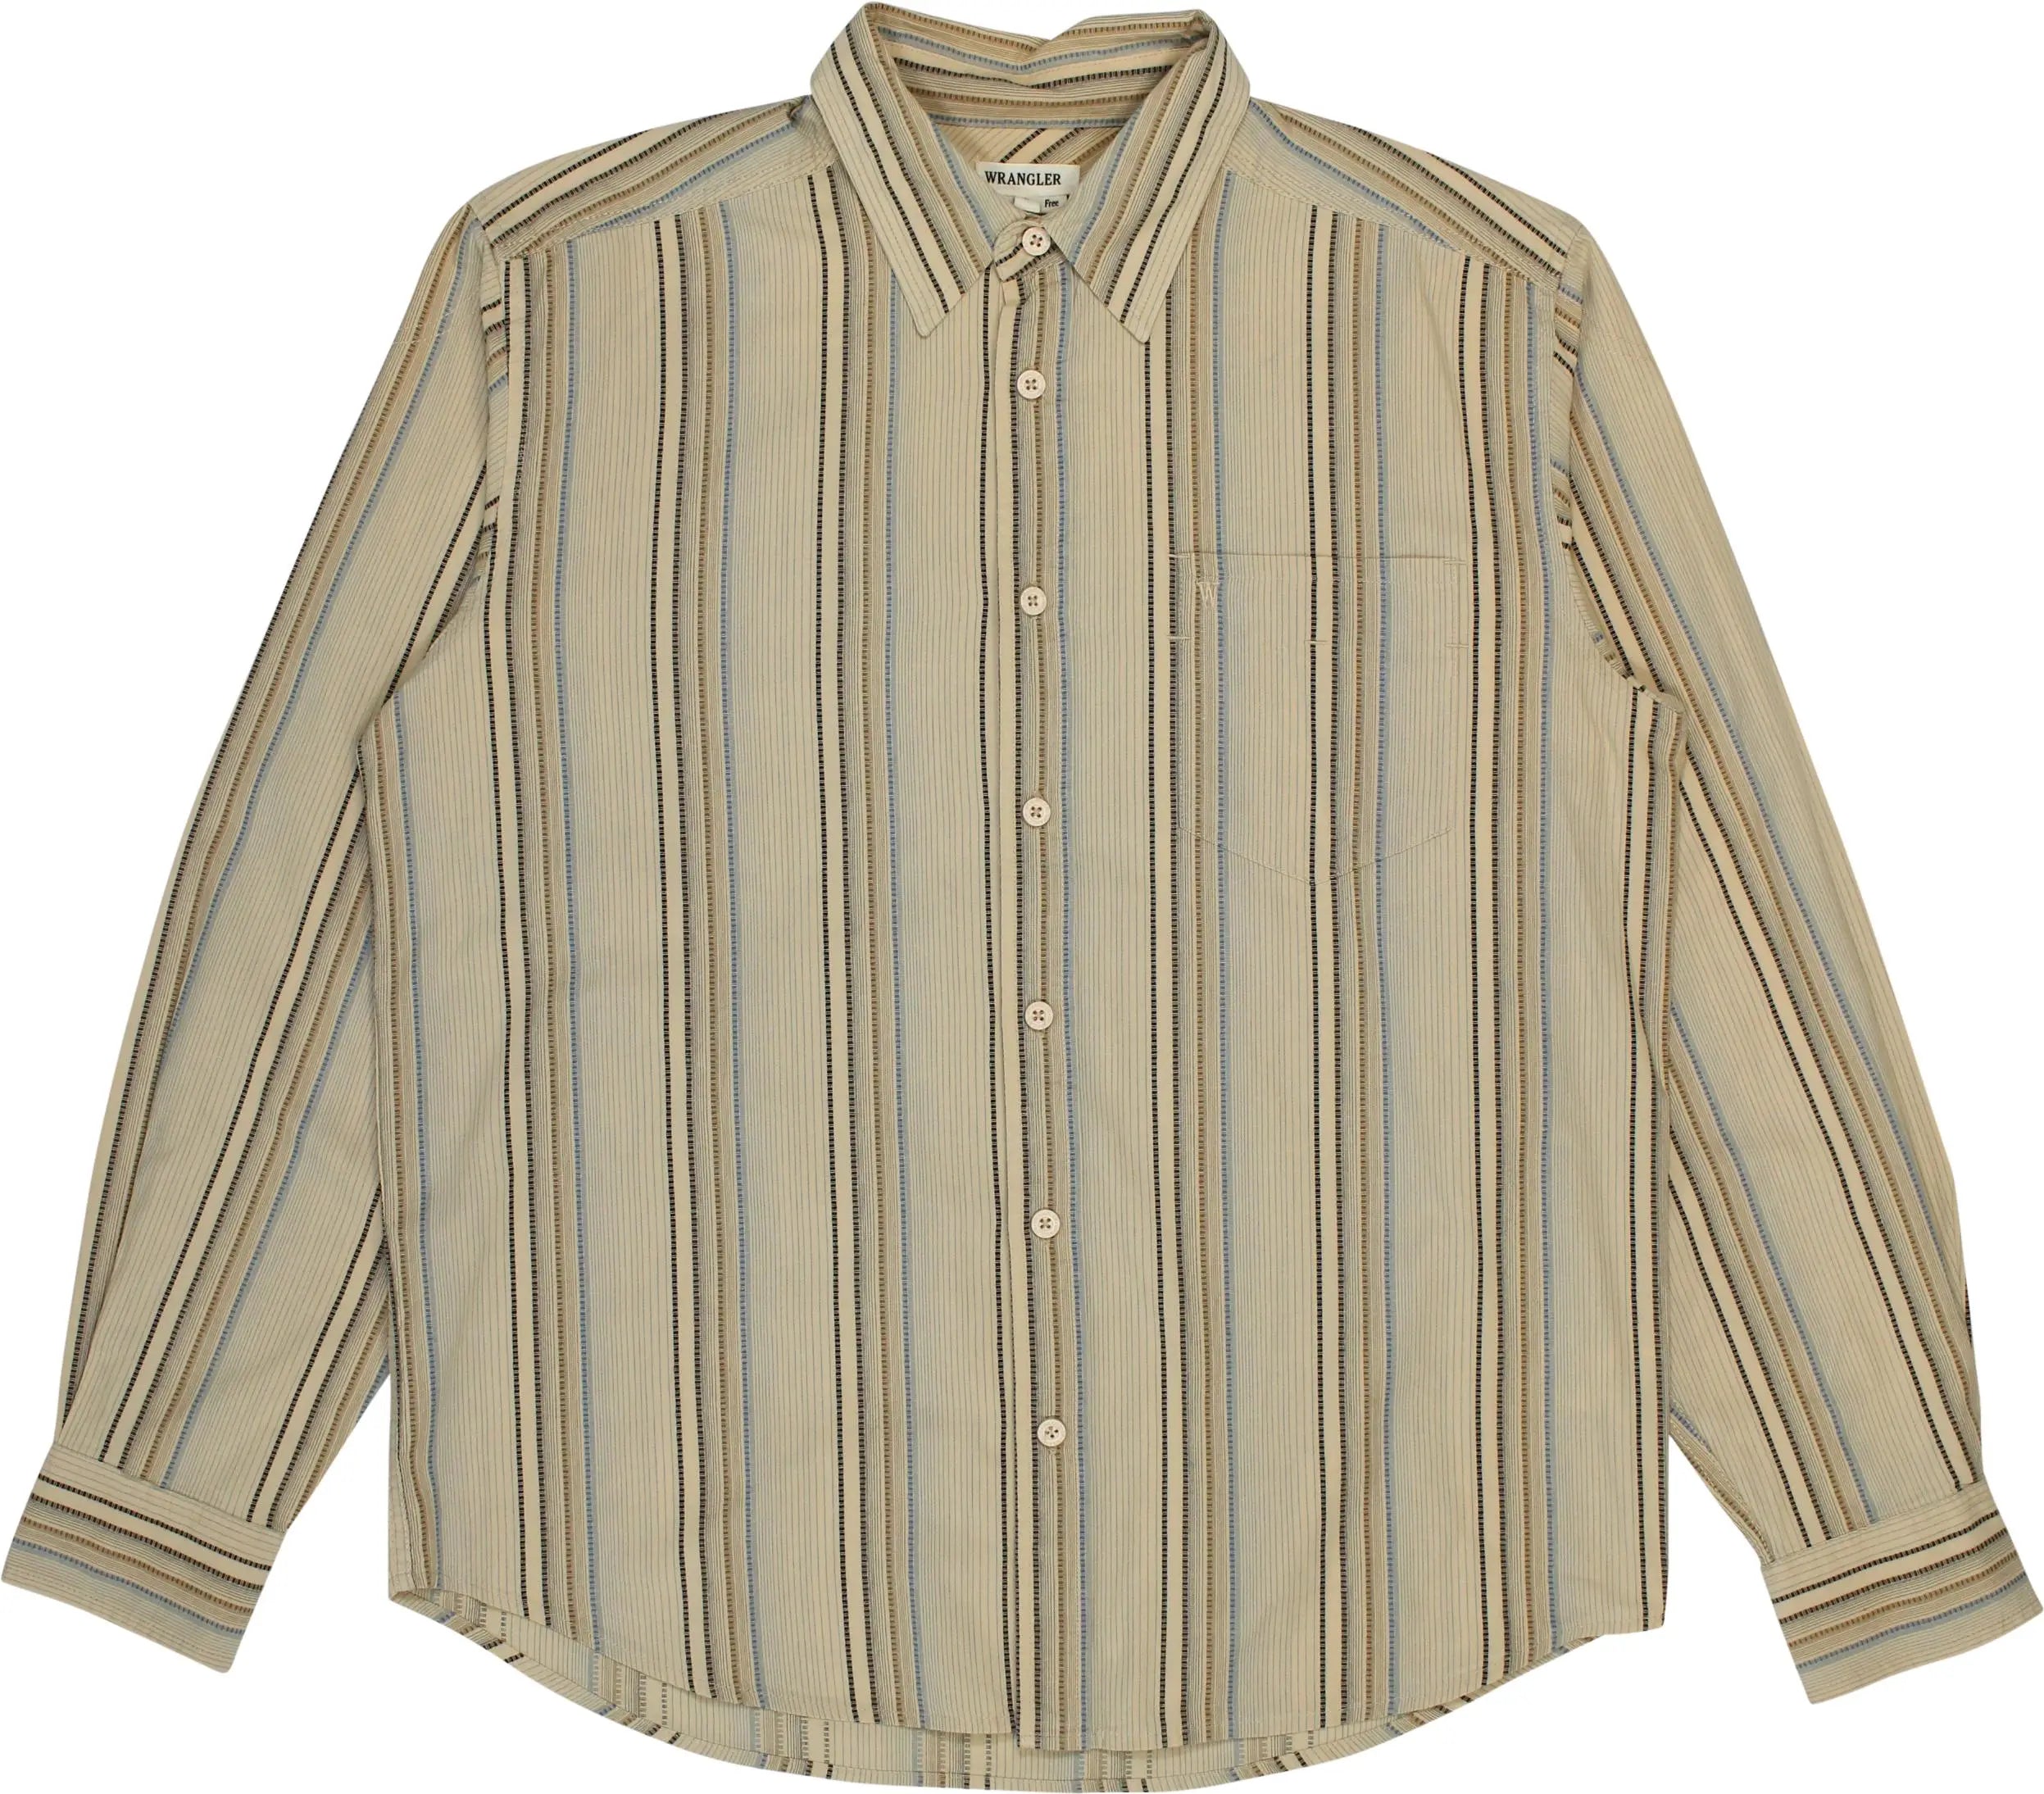 Wrangler - Wrangler Striped Shirt- ThriftTale.com - Vintage and second handclothing